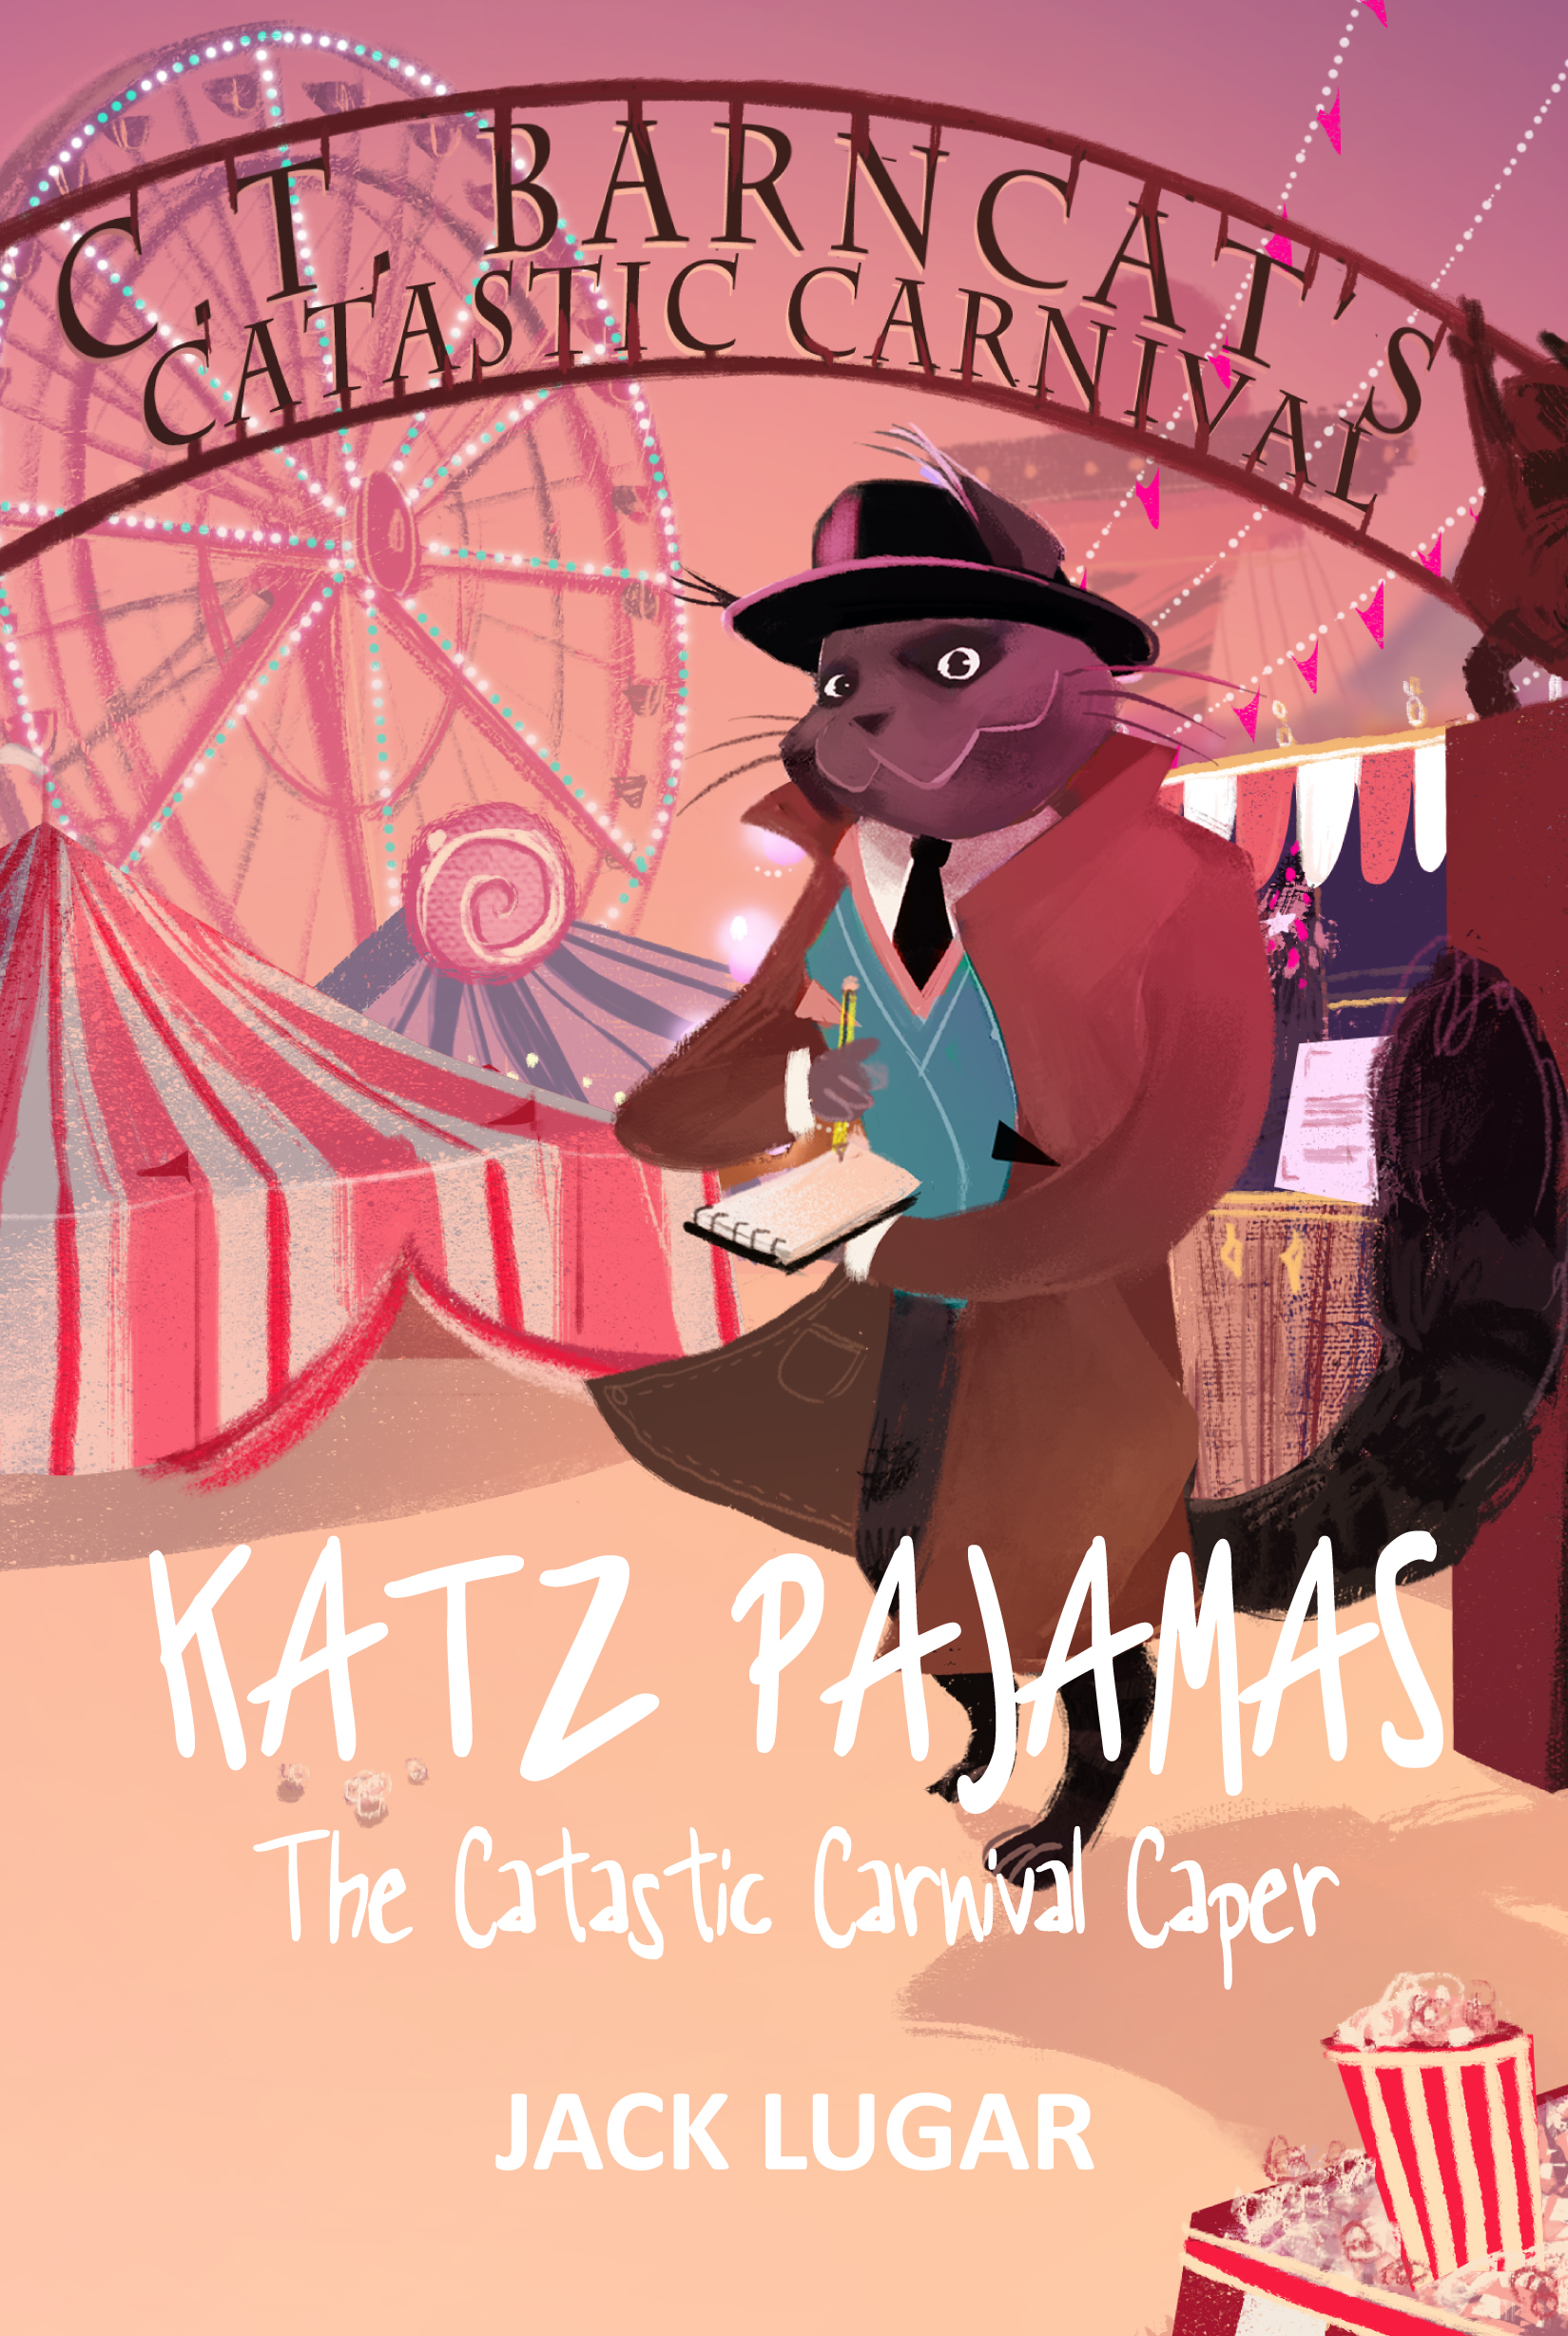 Katz Pajamas – The Catastic Carnival Caper